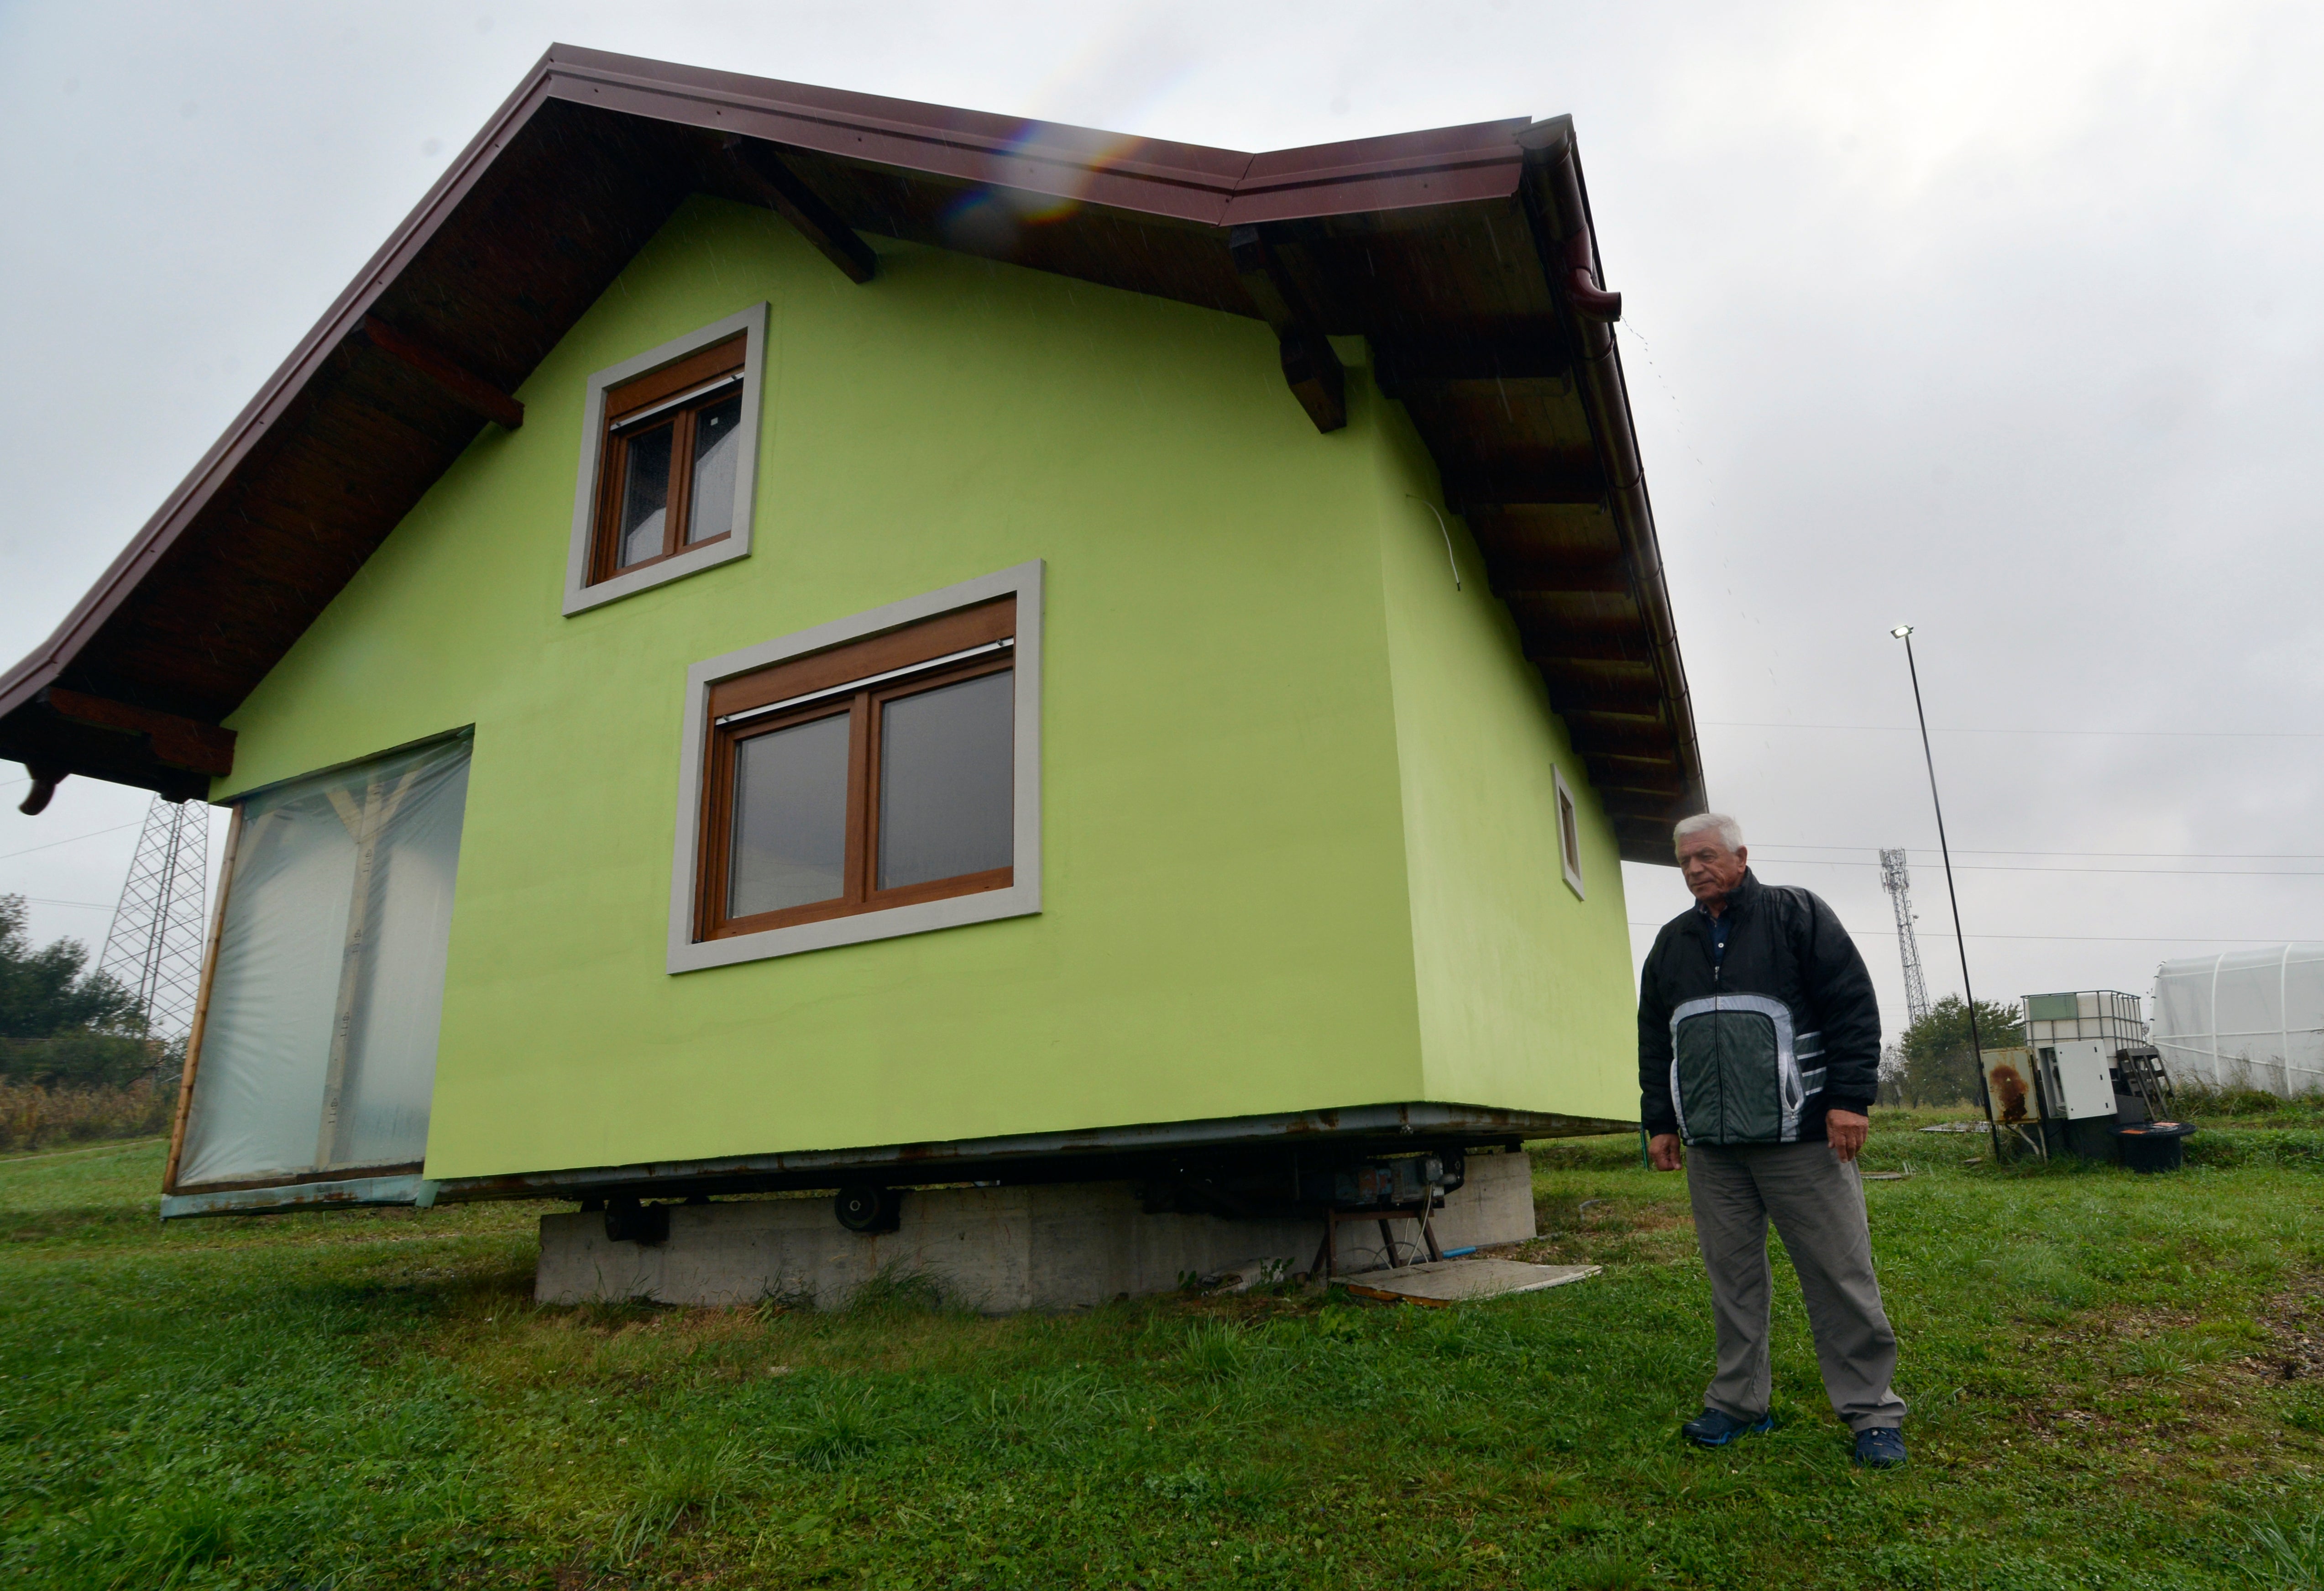 Bosnia Rotating House